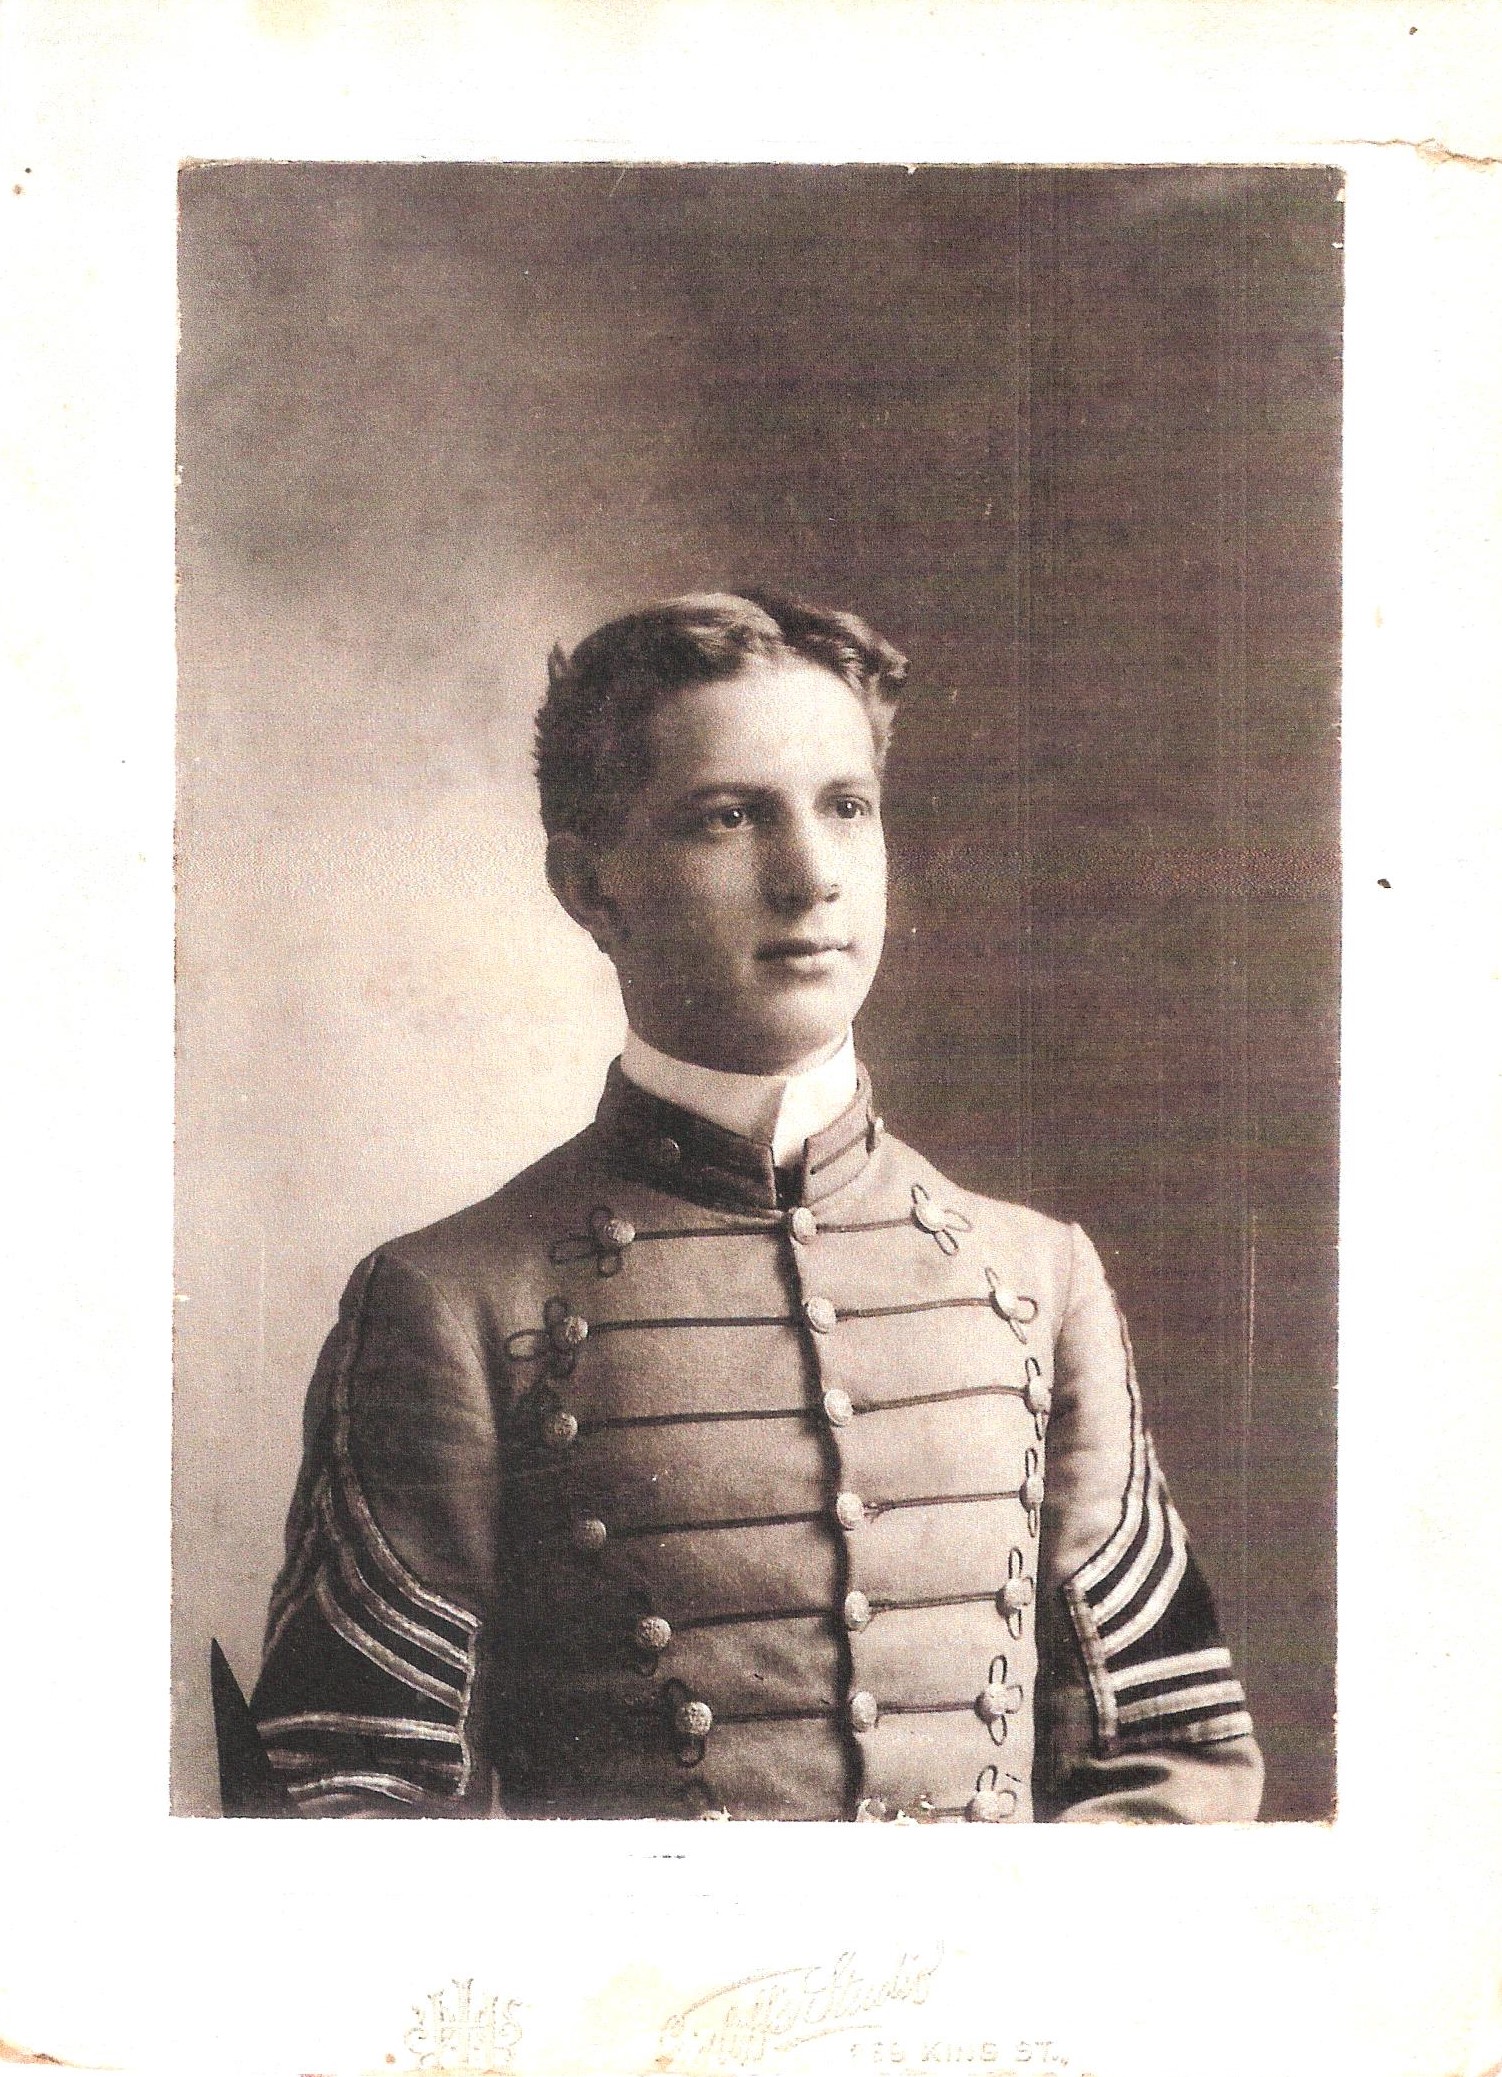 photograph of John W. Linley